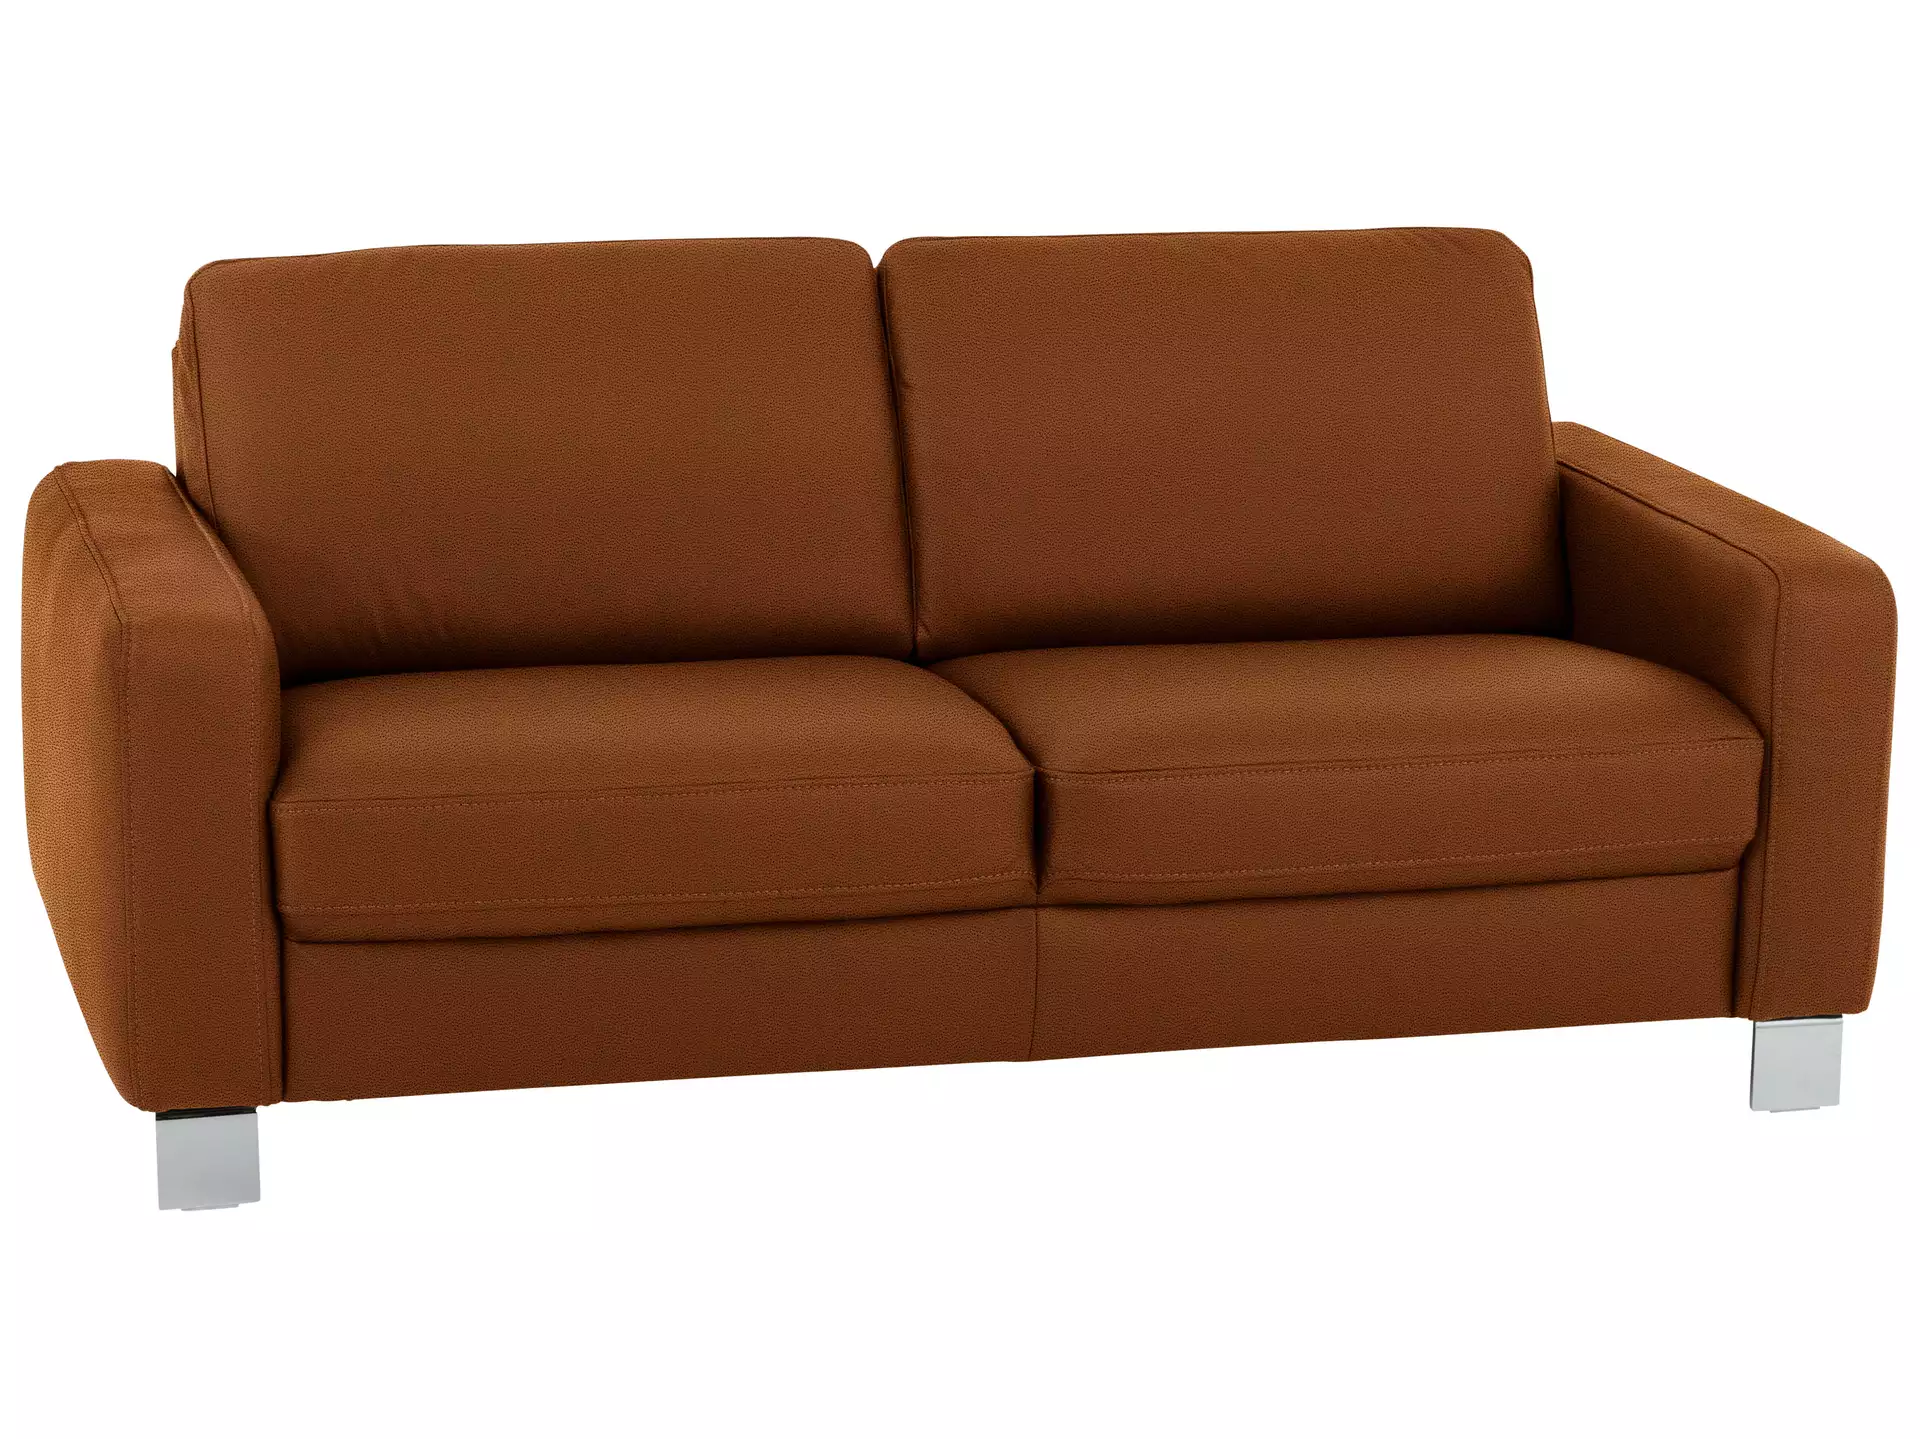 Sofa Shetland Basic B: 188 cm Polipol / Farbe: Zimt / Material: Microfaser Basic